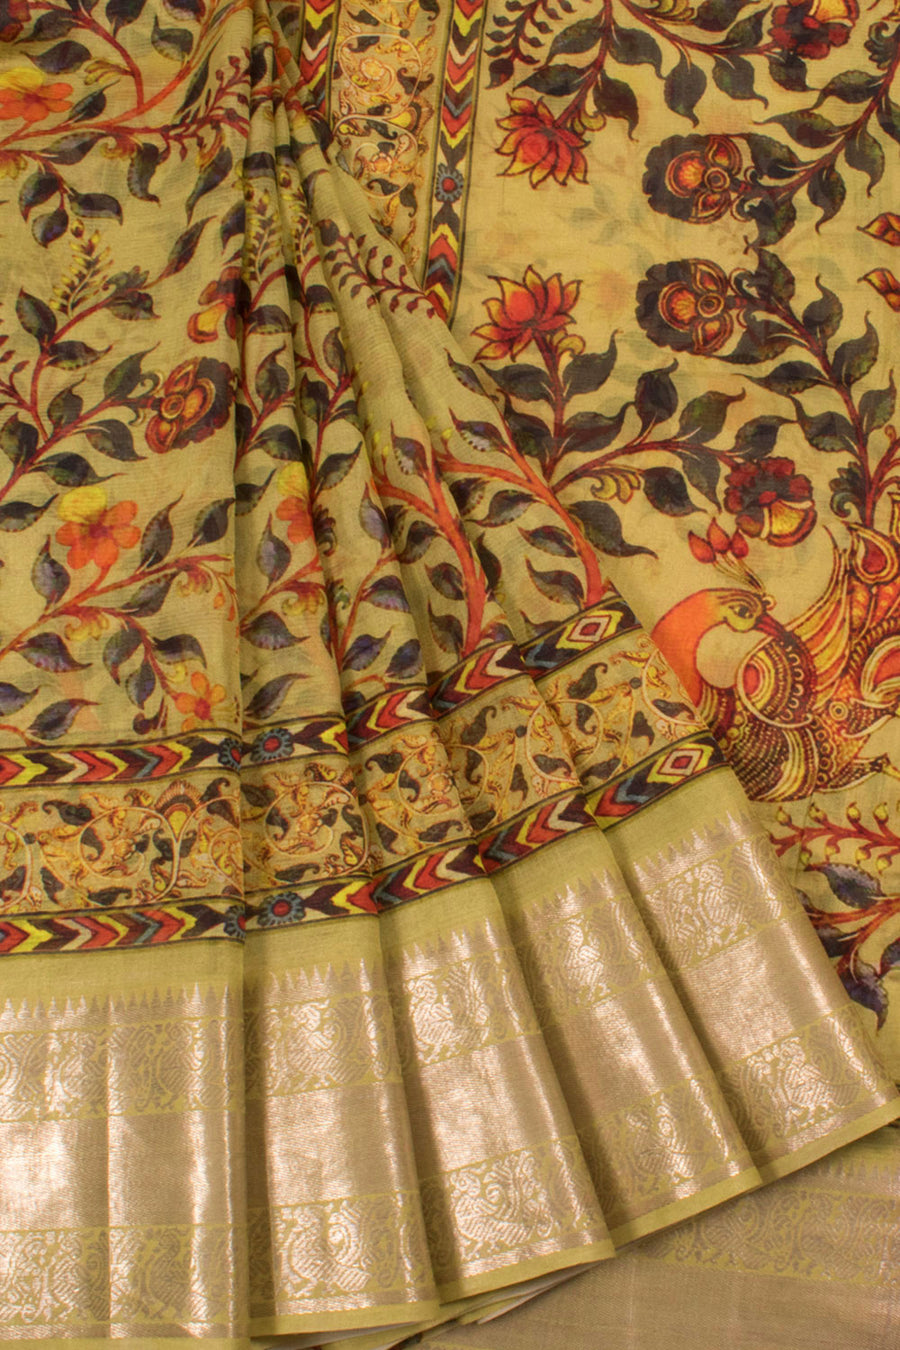 Digital Printed Mangalgiri Silk Cotton Saree with Floral Design and Peacock Pallu